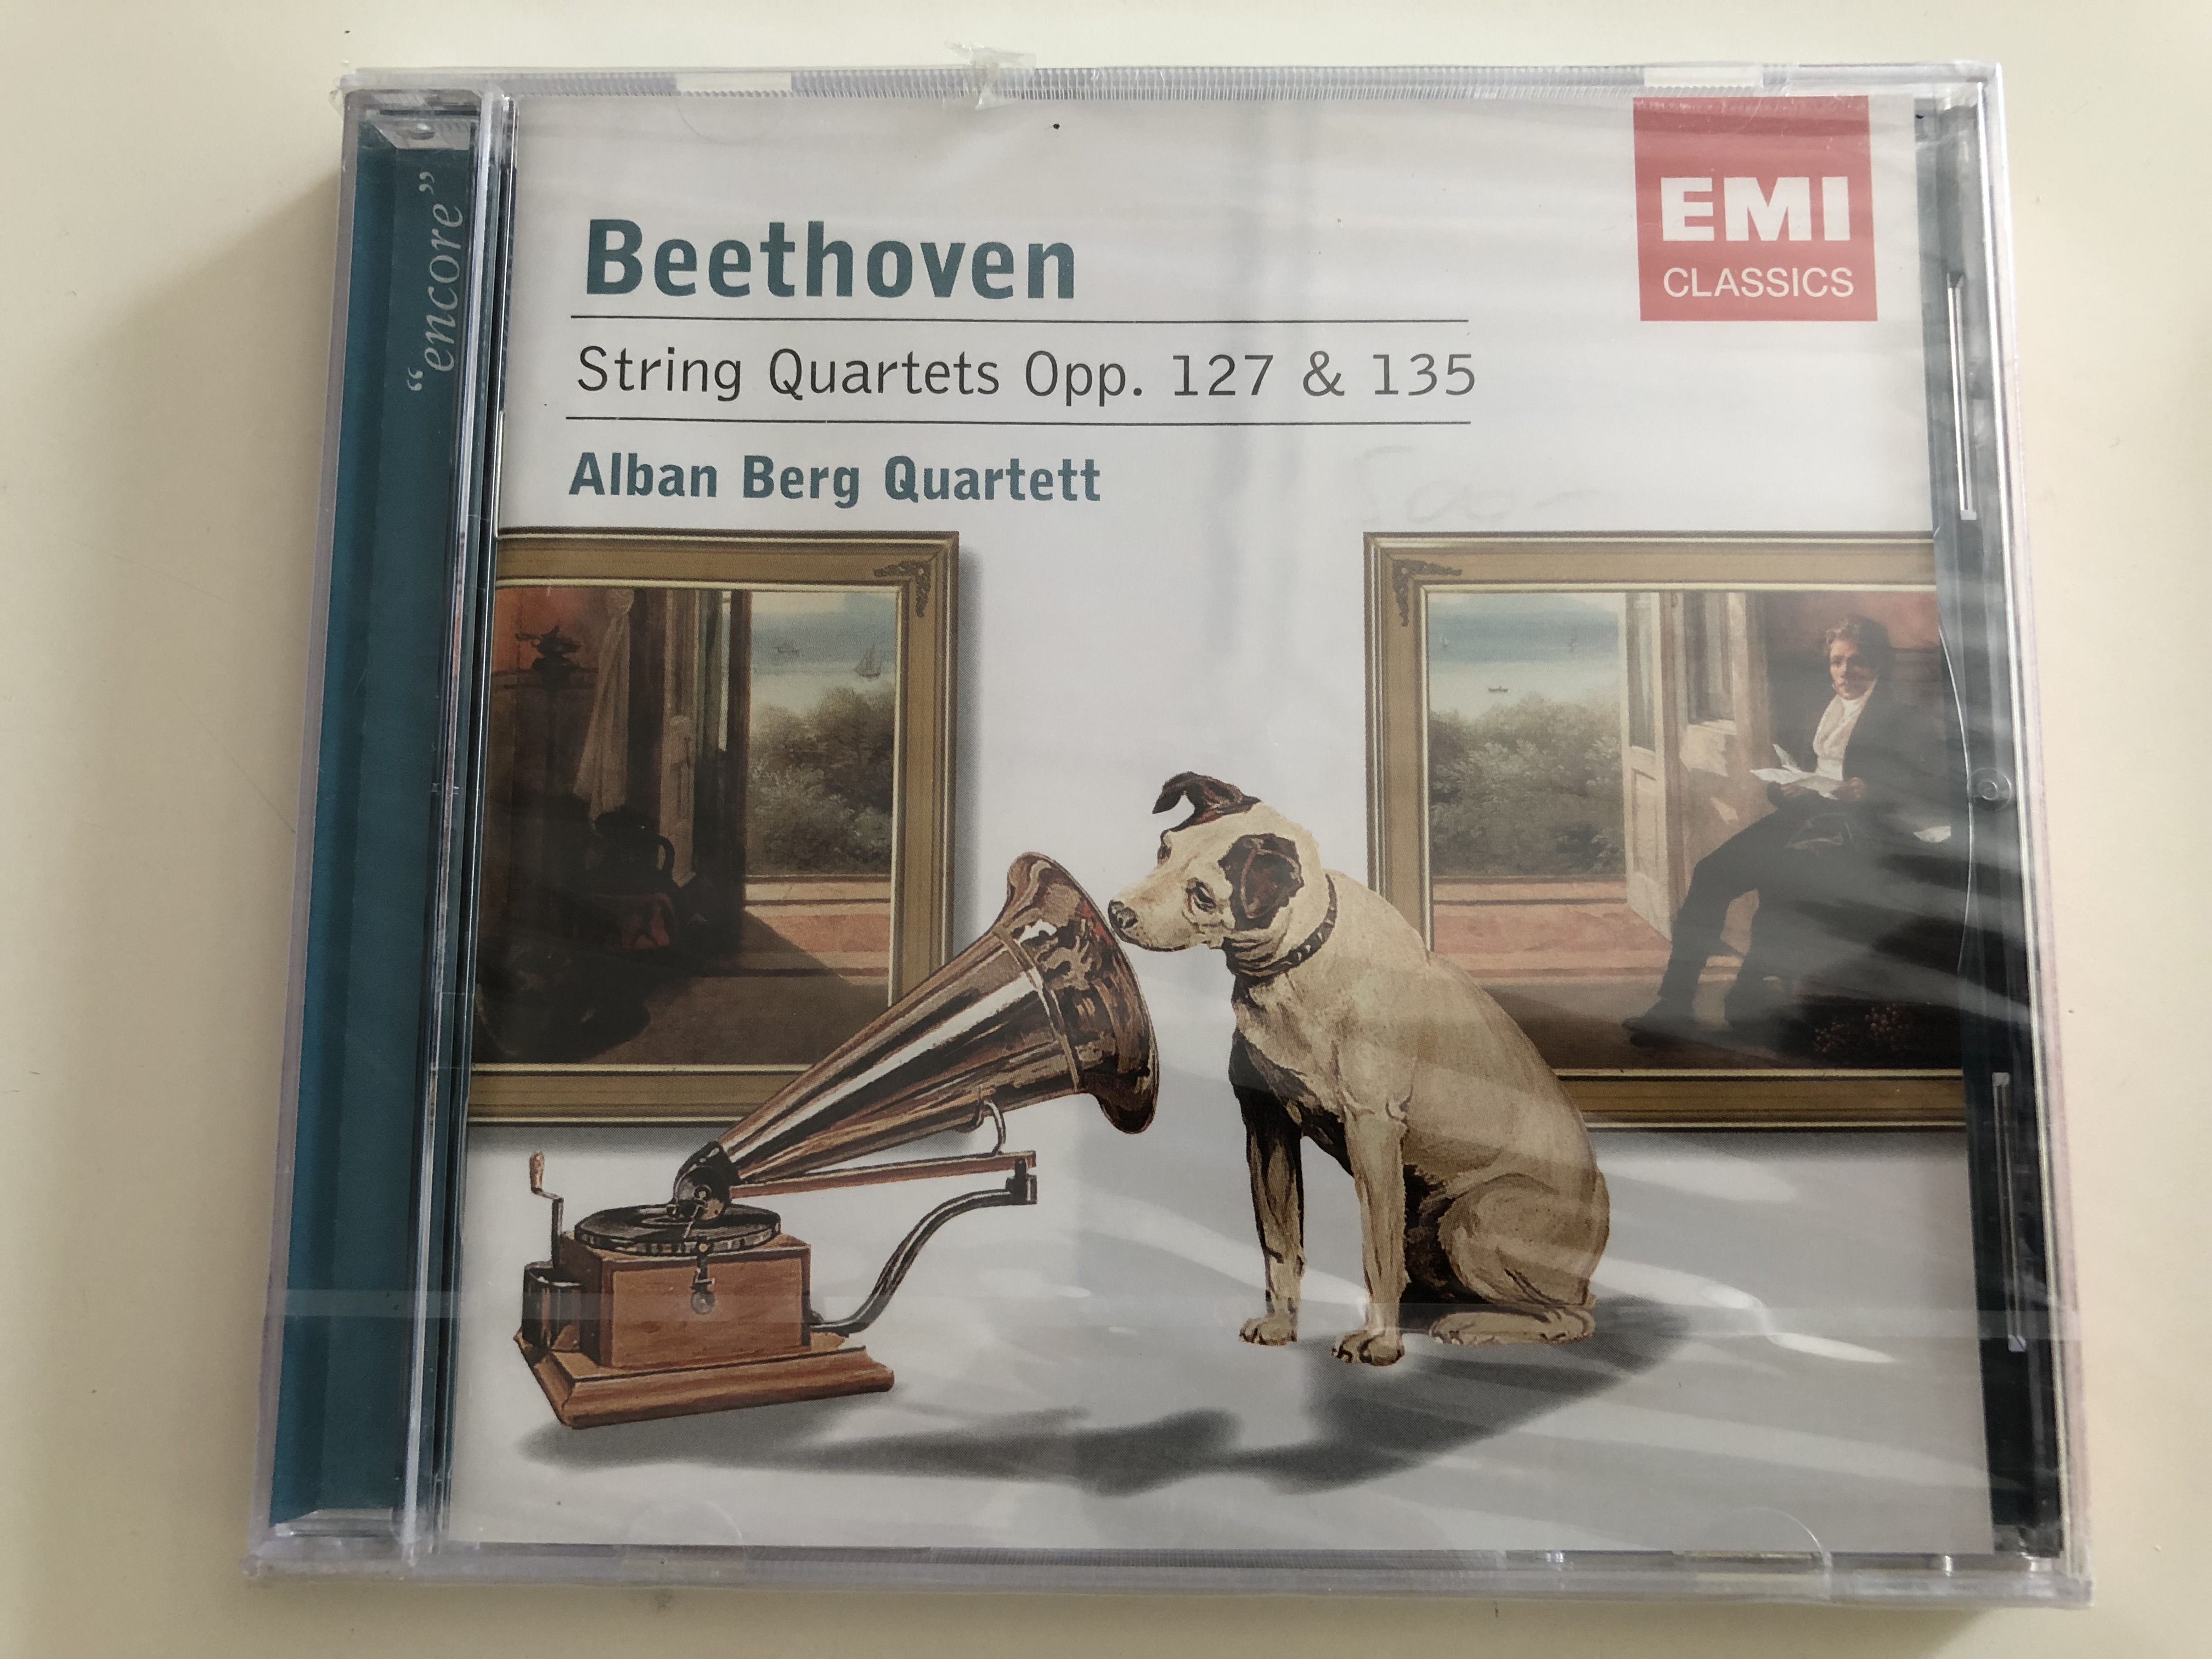 beethoven-string-quartets-opp.-127-135-alban-berg-quartett-emi-classics-audio-cd-2005-1-.jpg